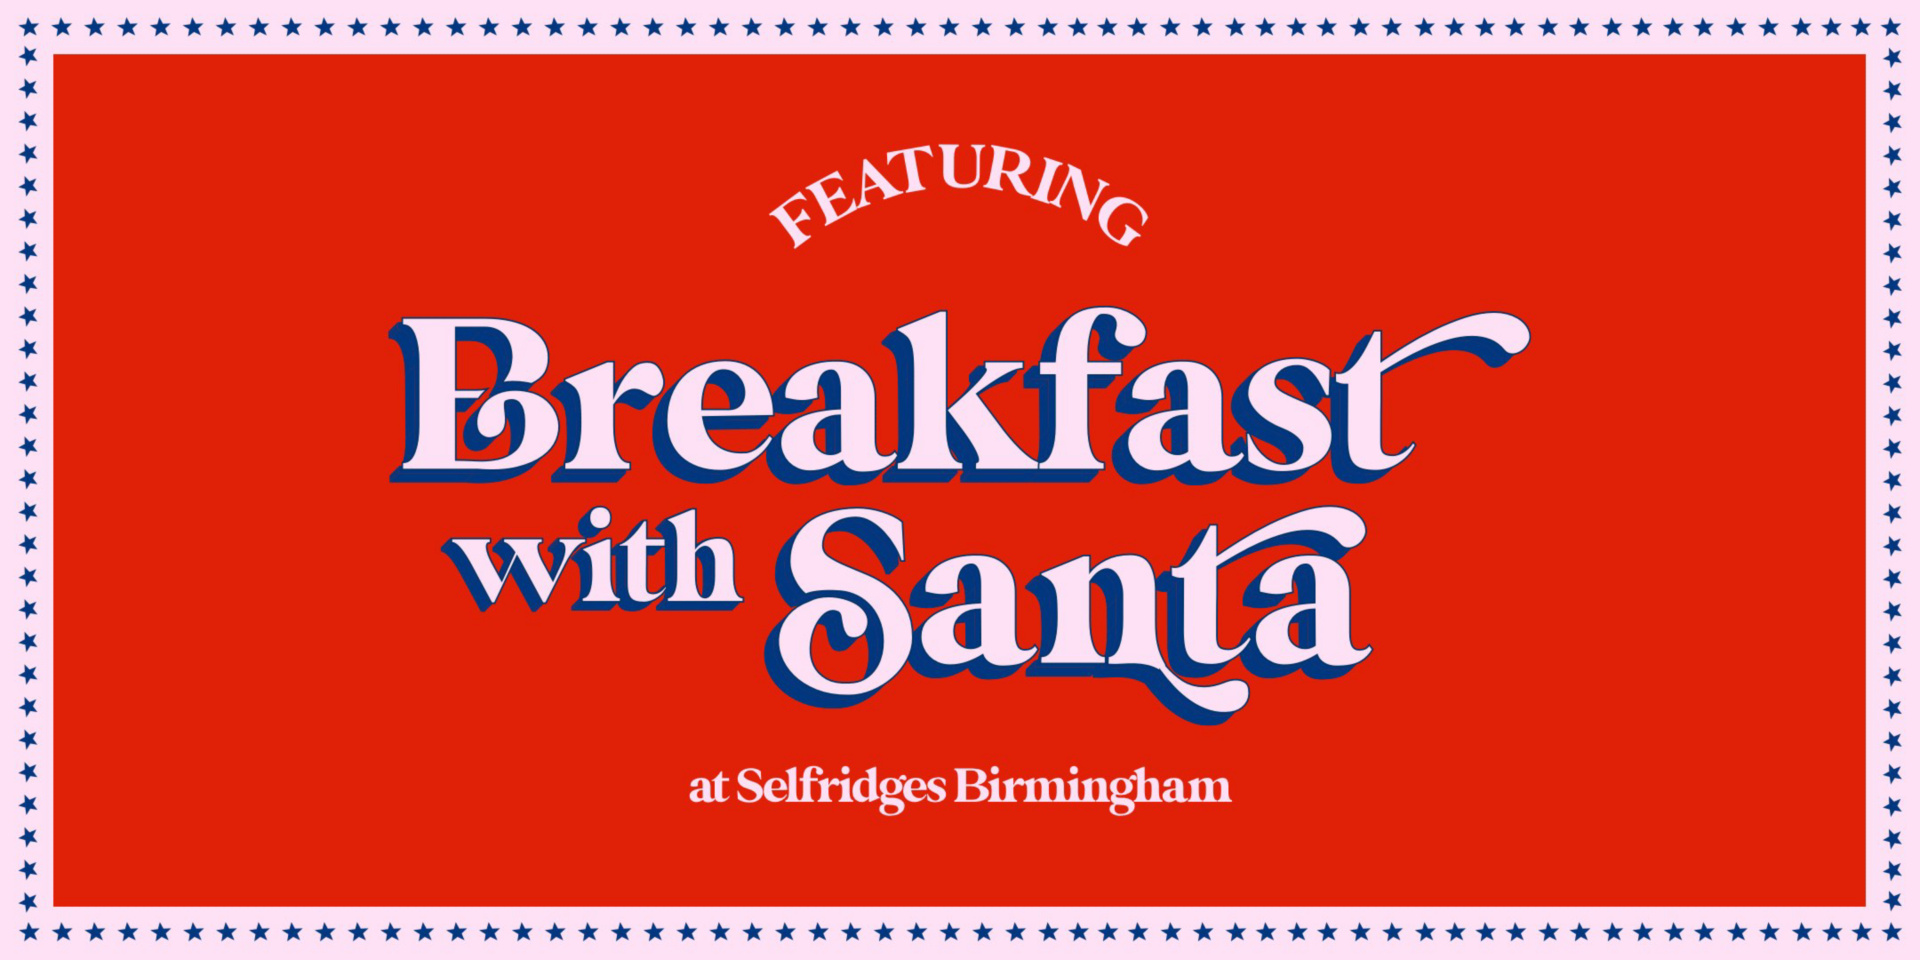 Breakfast with Santa at Selfridges Birmingham